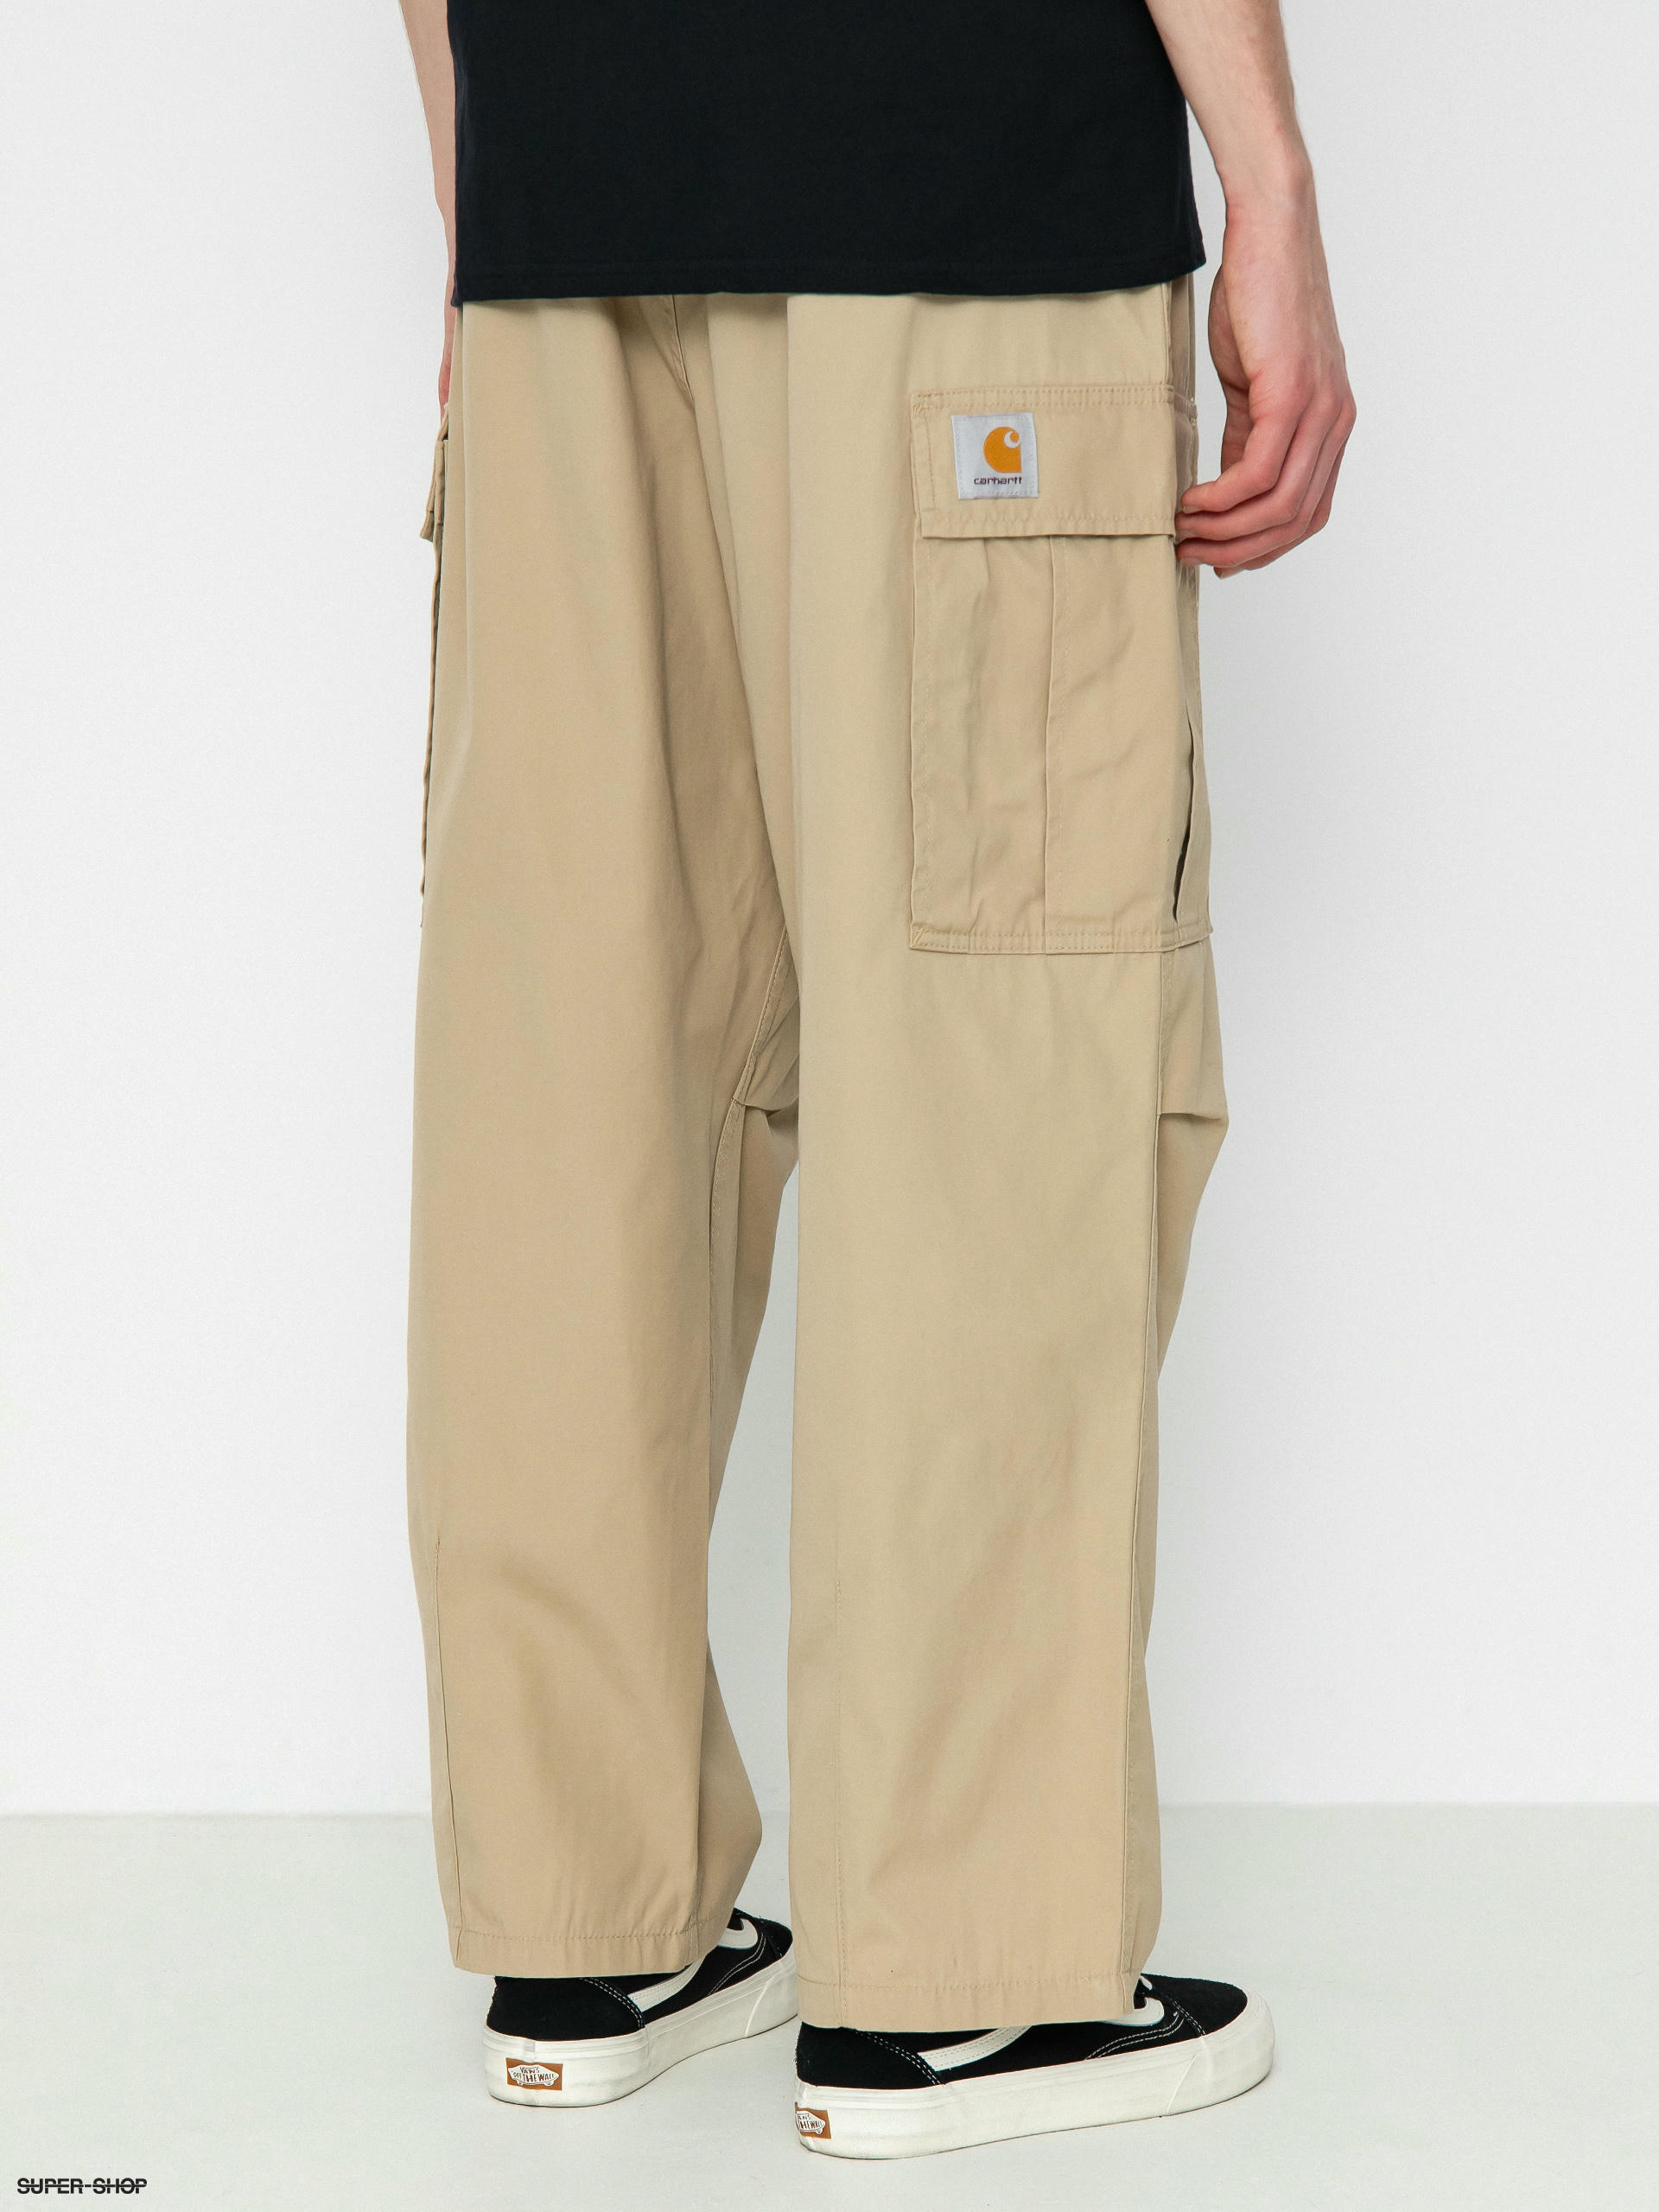 Carhartt WIP Cole Cargo Pants (sable)